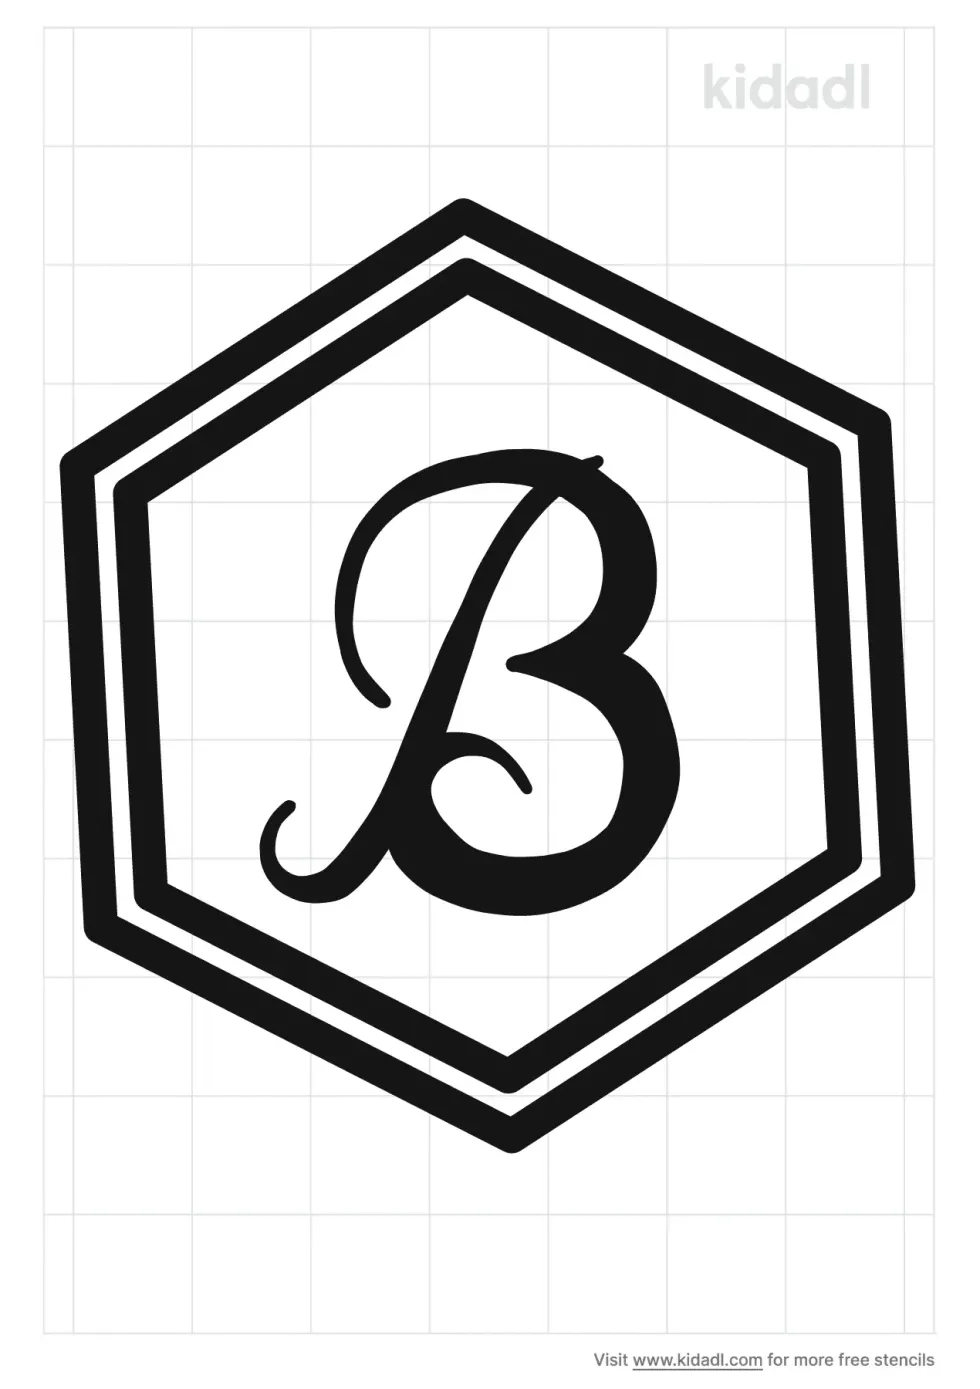 B Monogram